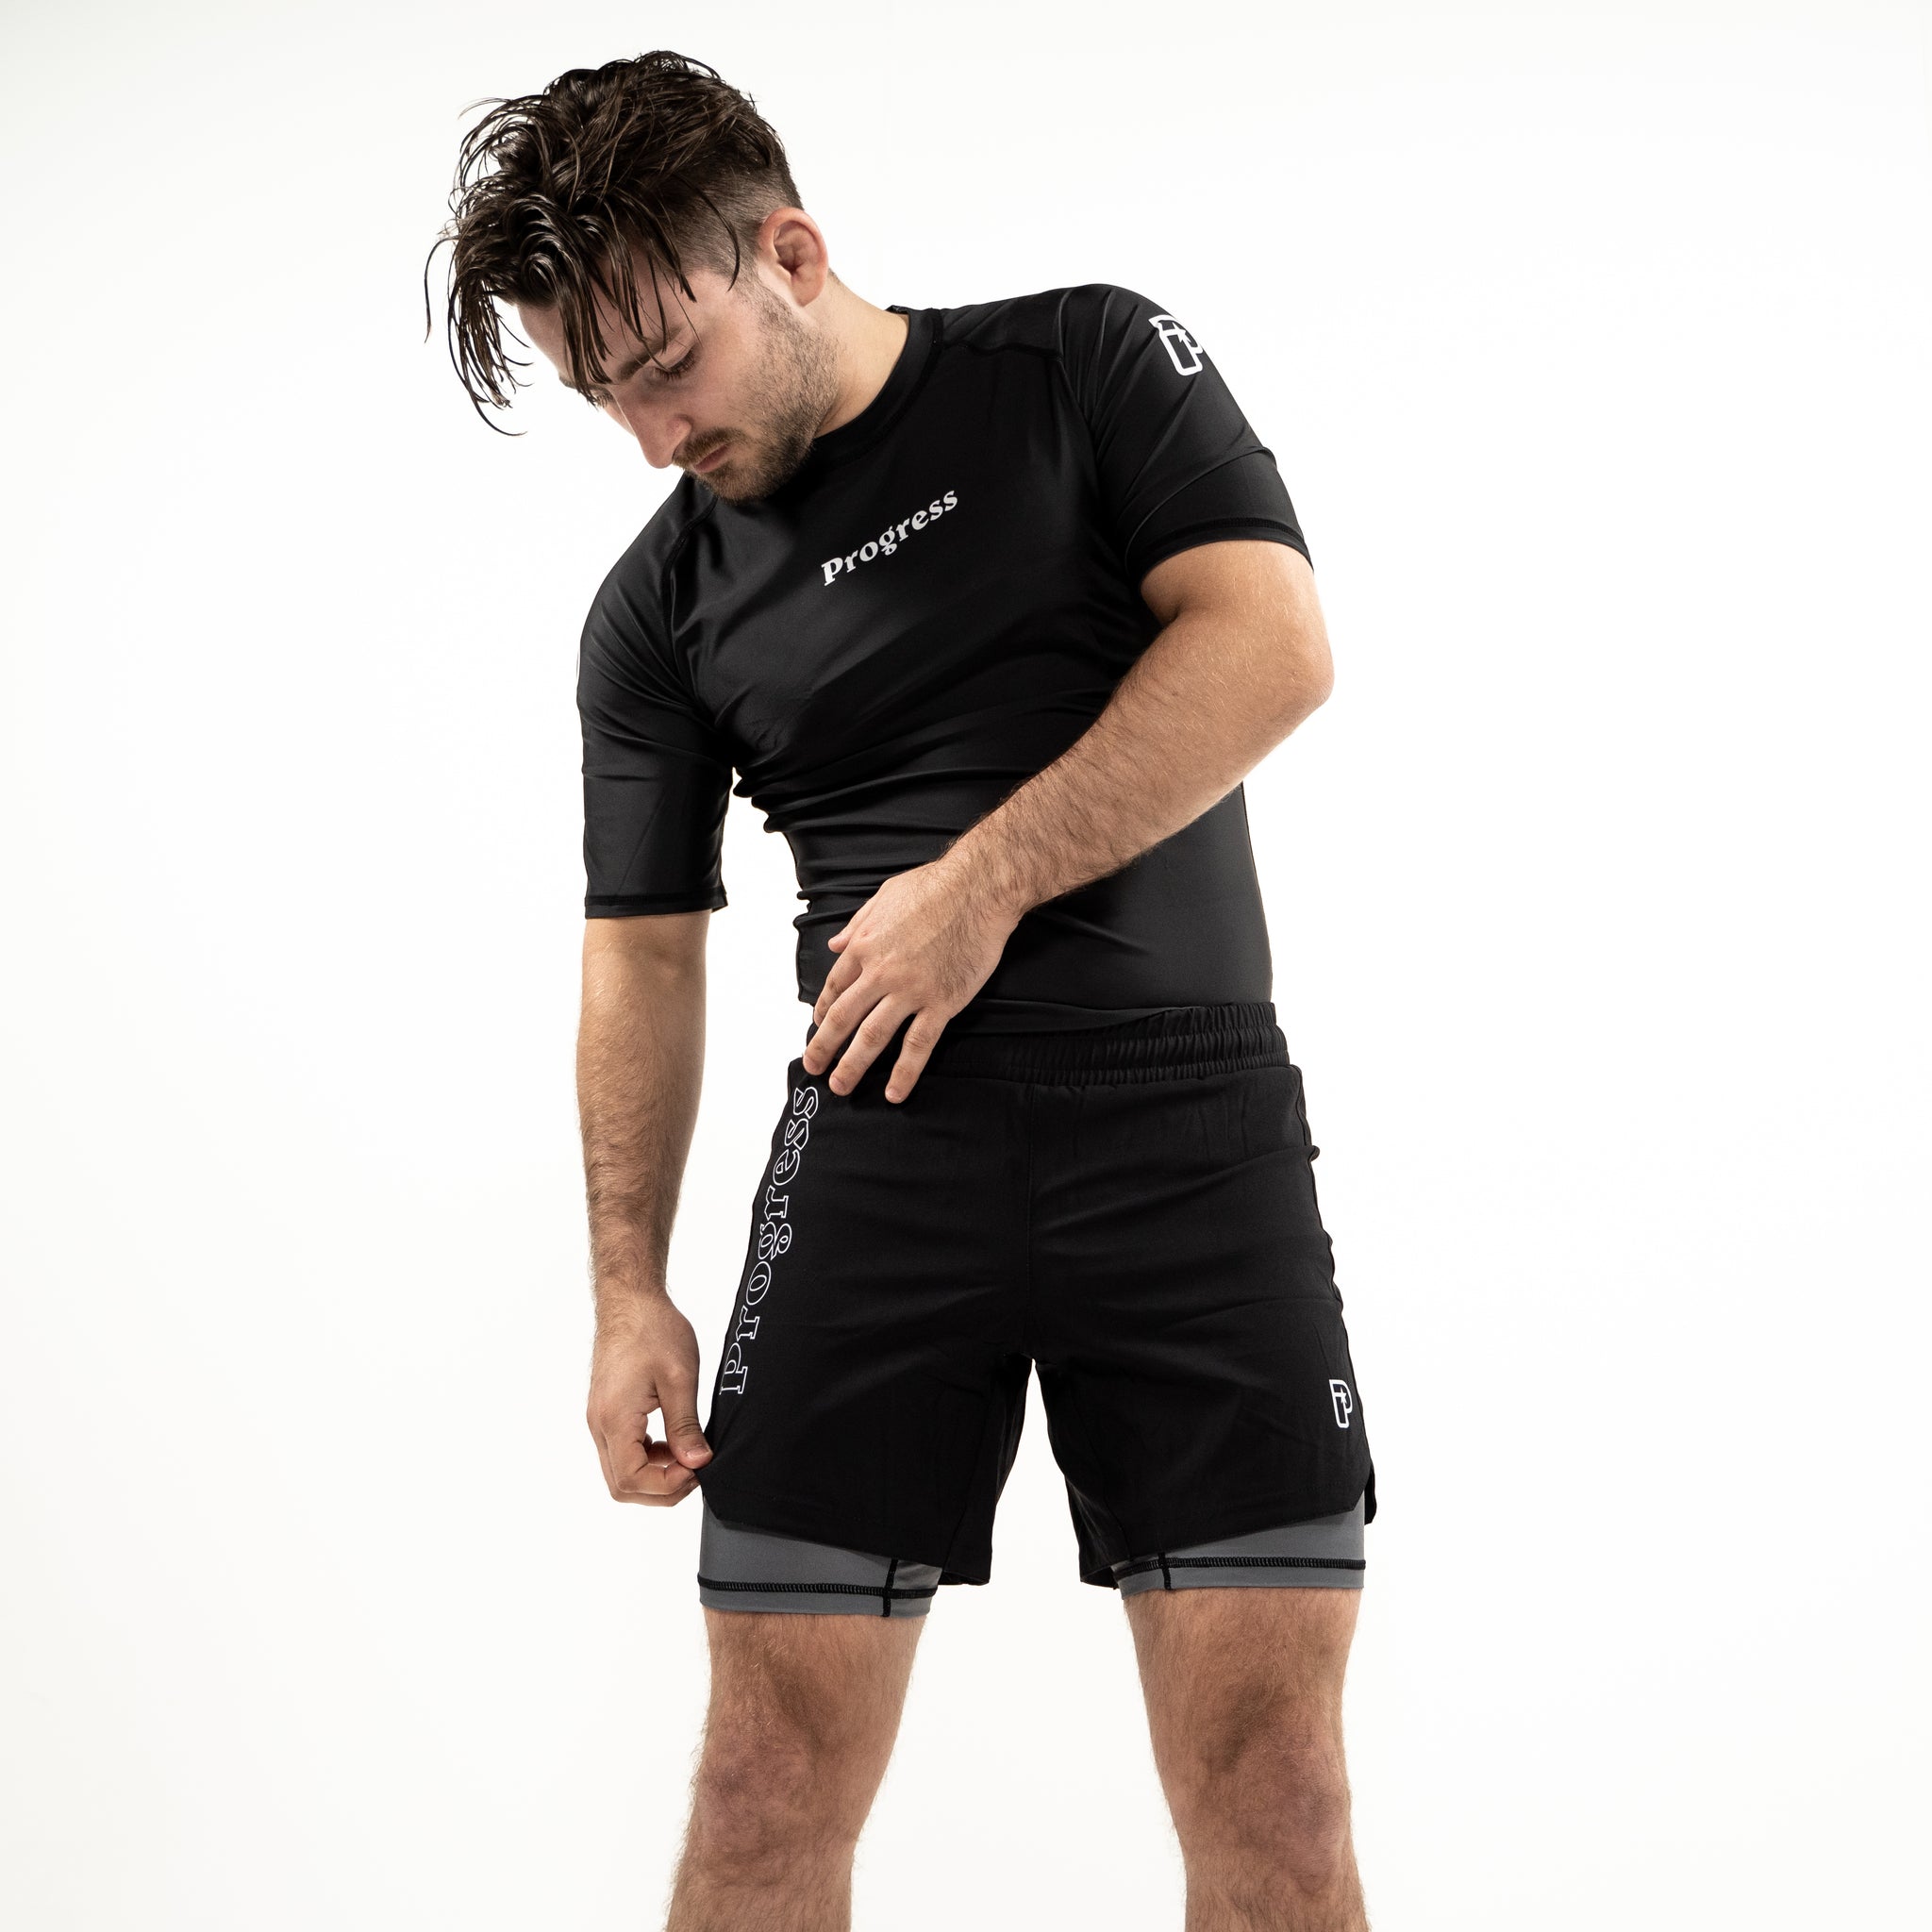 Profile Hybrid Grappling Shorts - Black